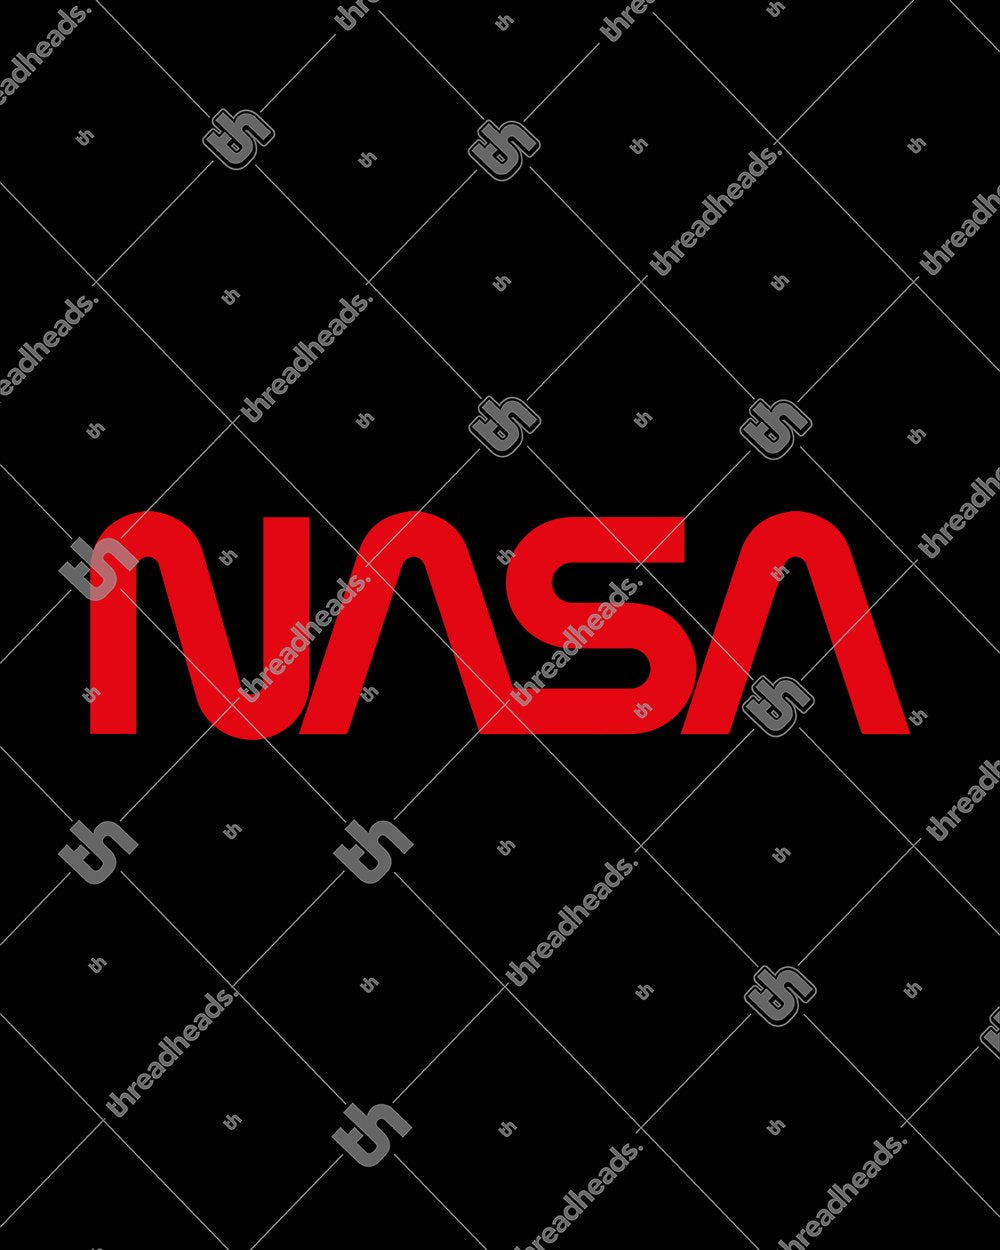 NASA Logotype T-Shirt Australia Online #colour_black